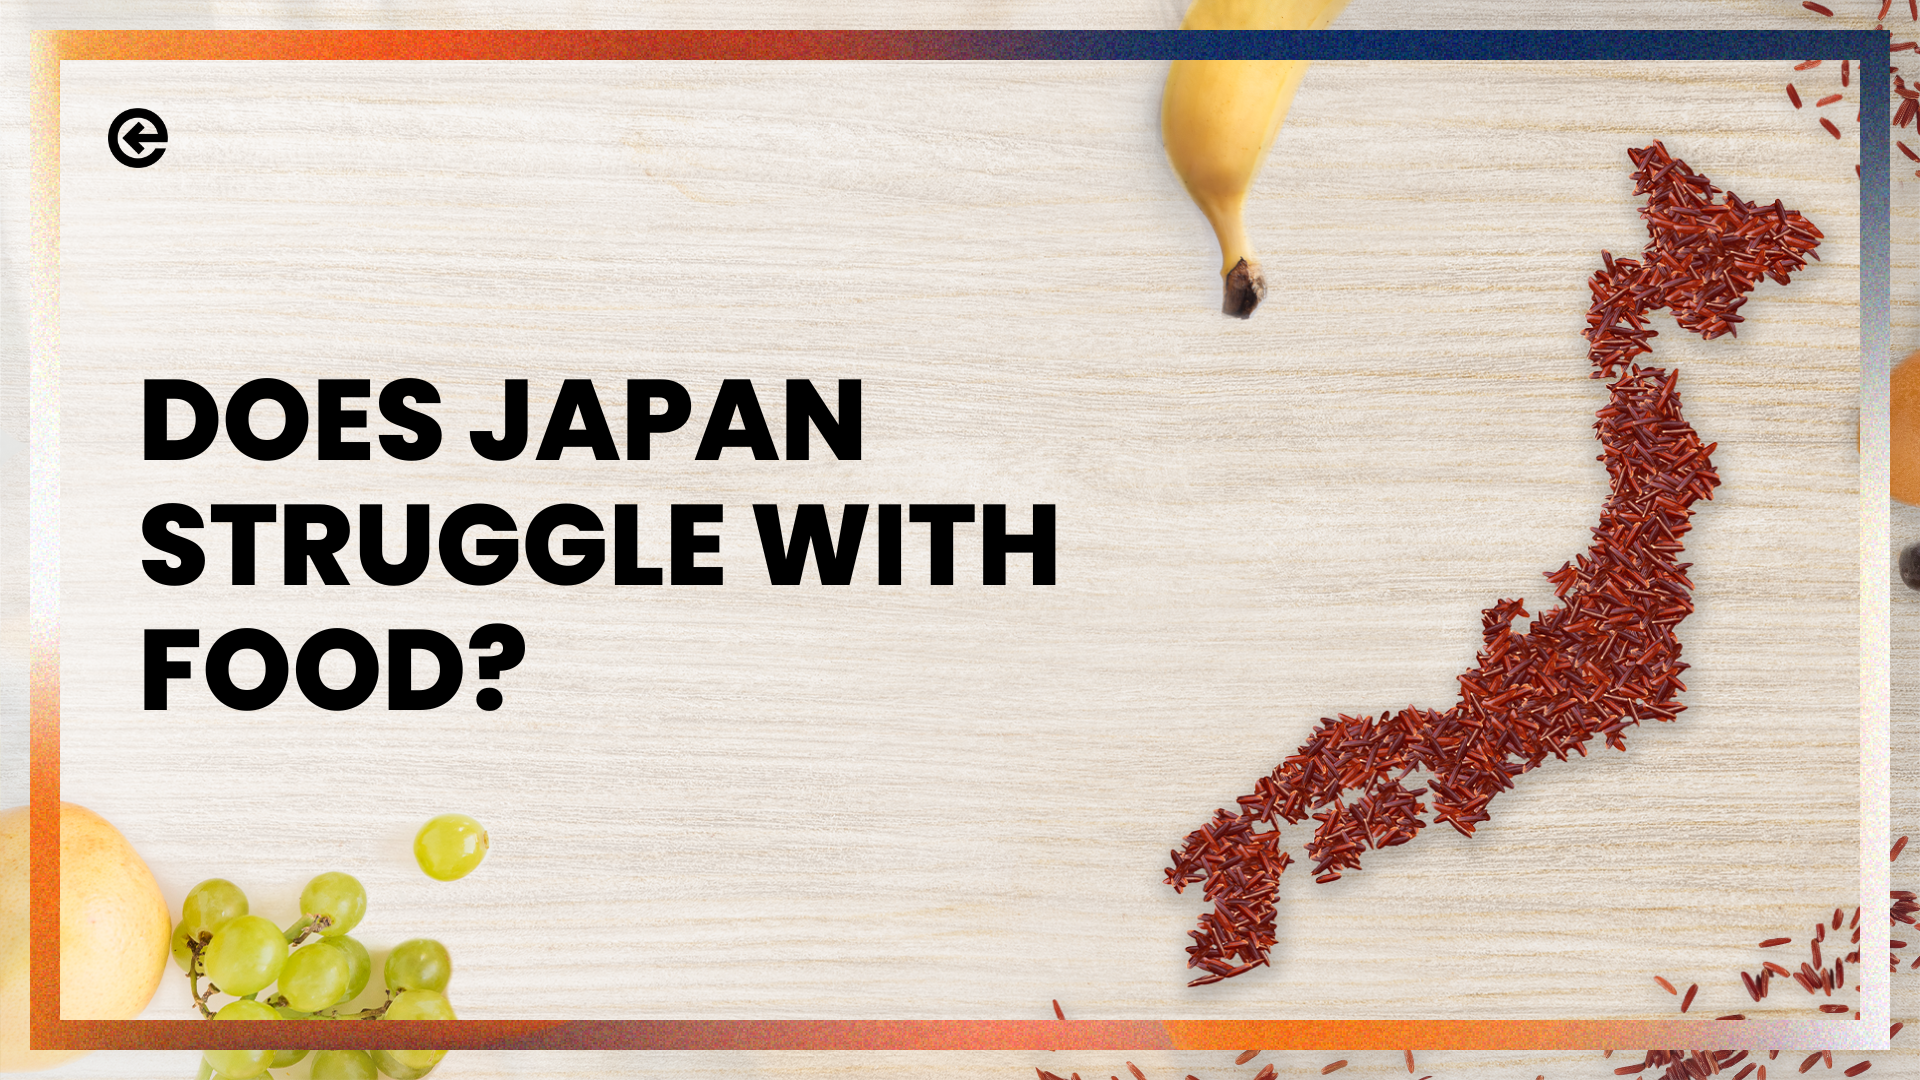 Hat Japan Probleme mit Lebensmitteln?